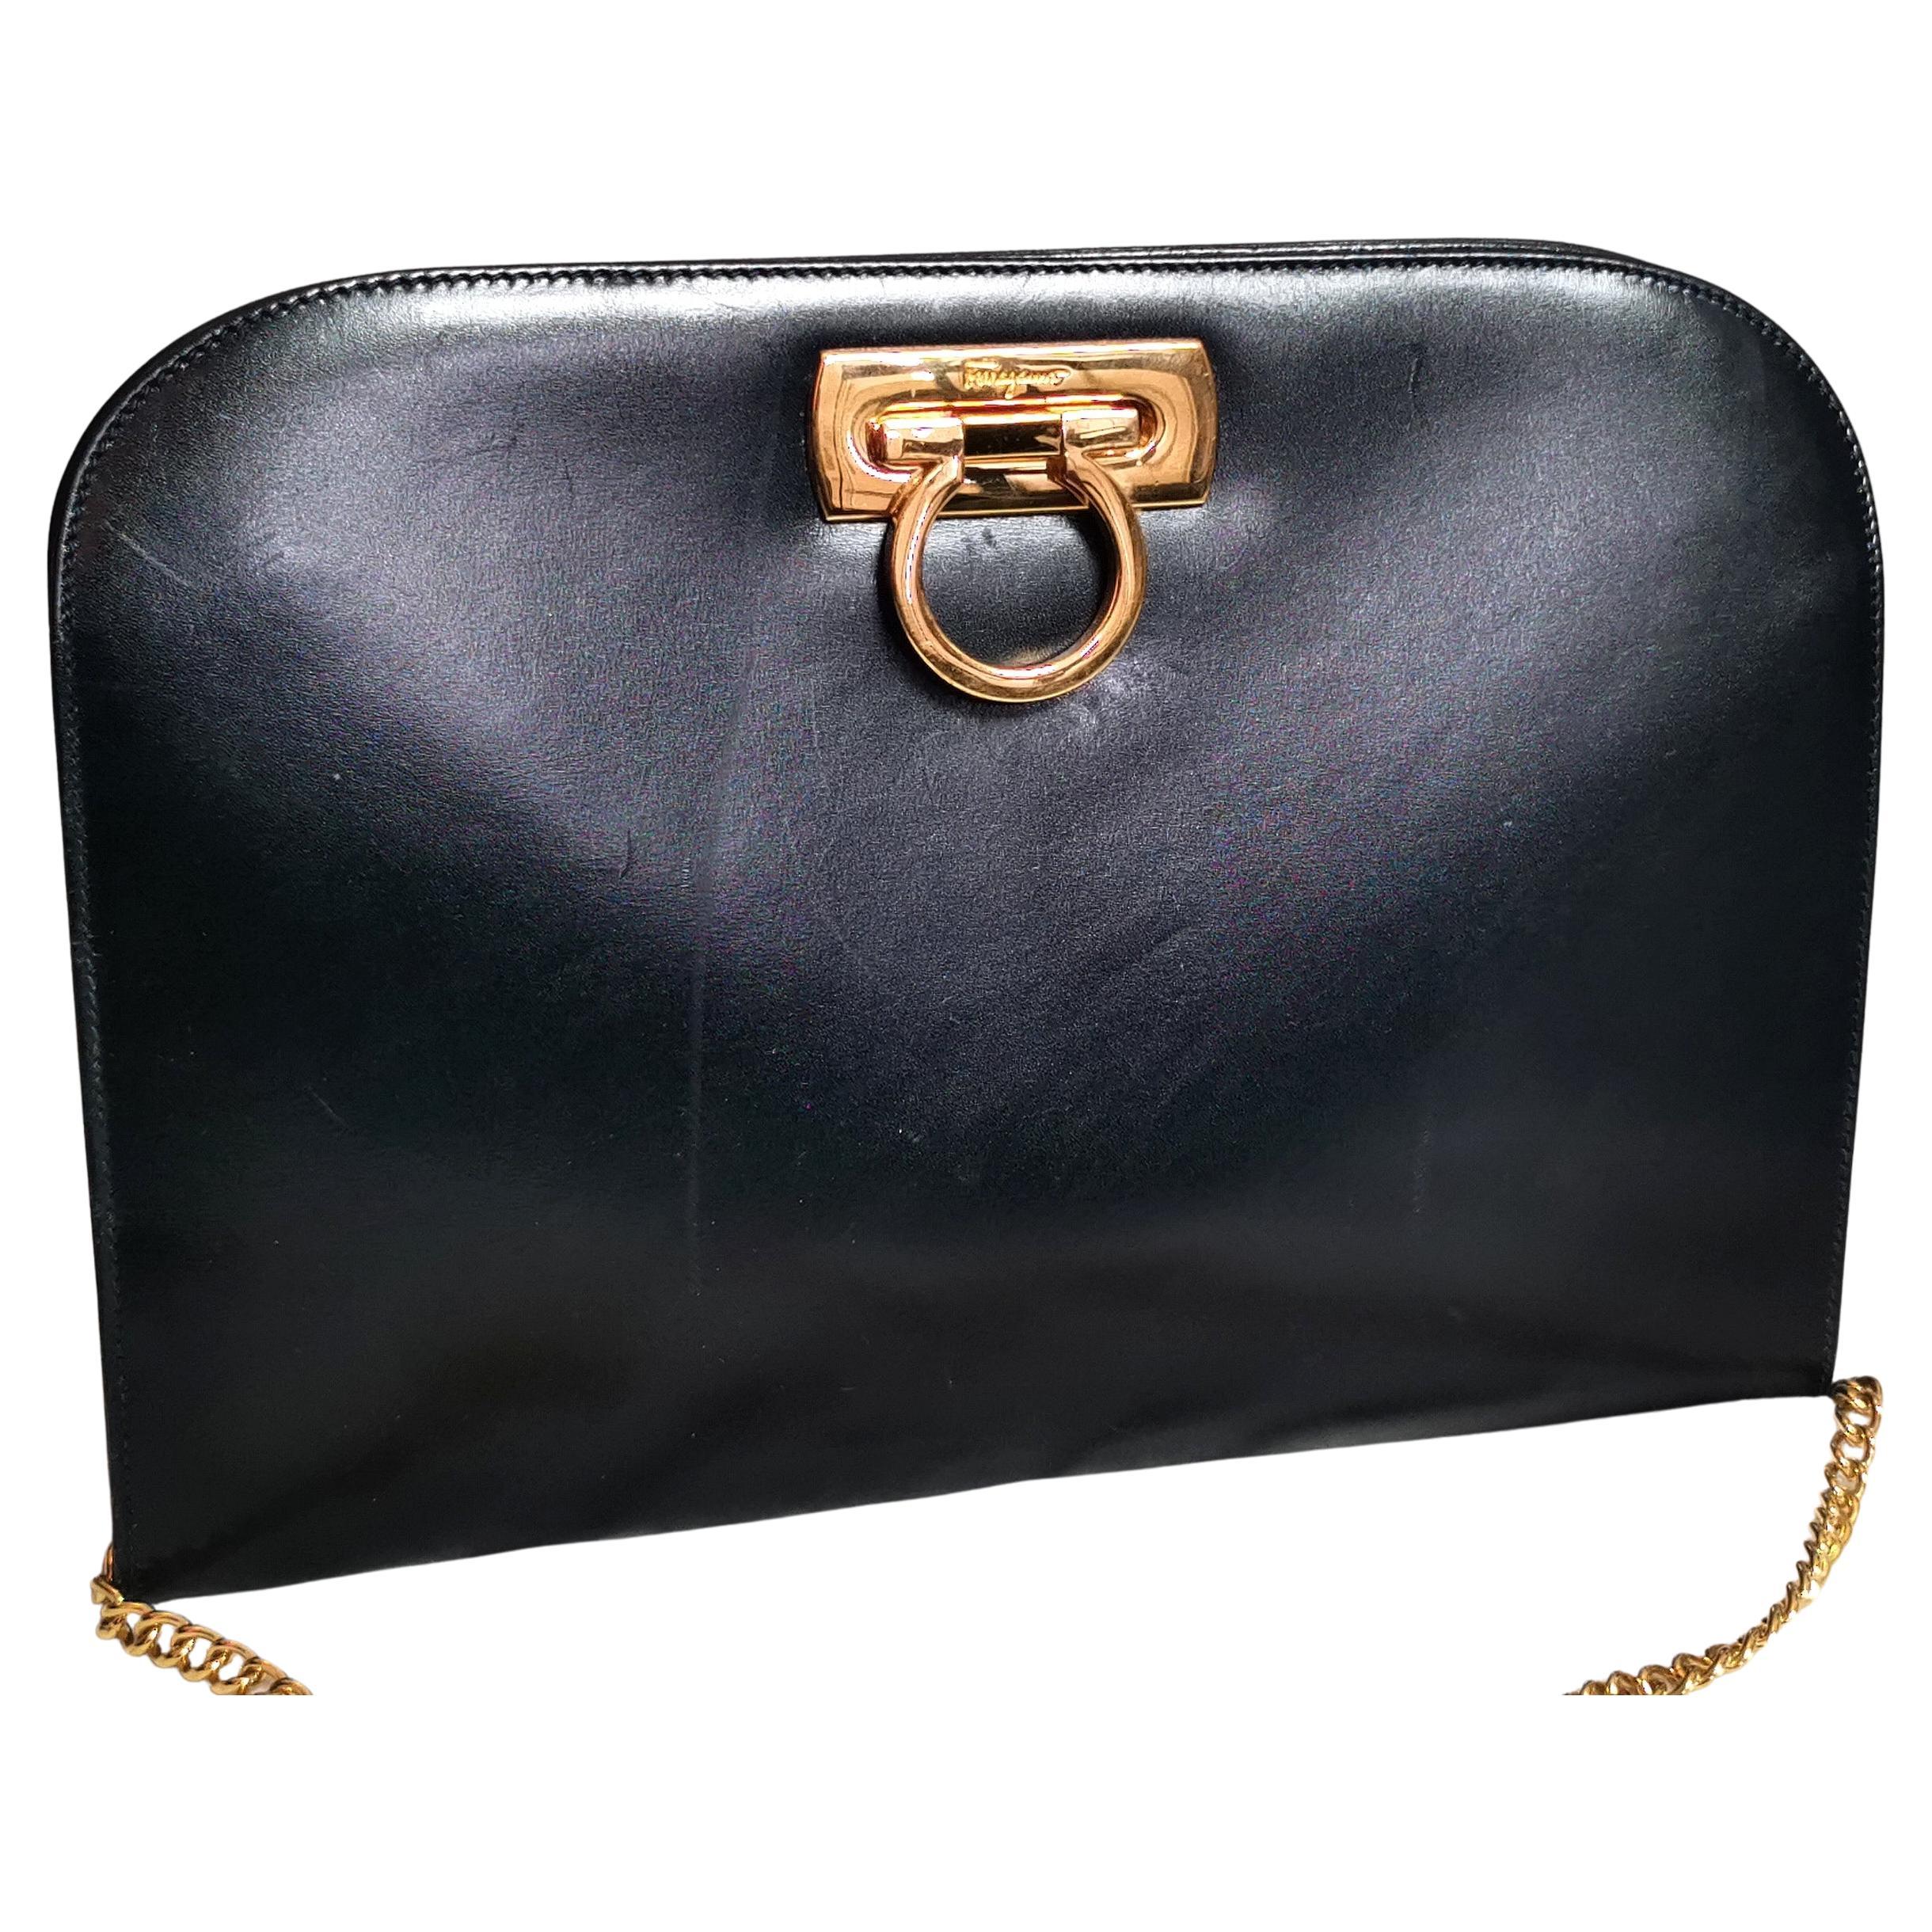 Salvatore Ferragamo Bags & Handbags for Women for sale | eBay